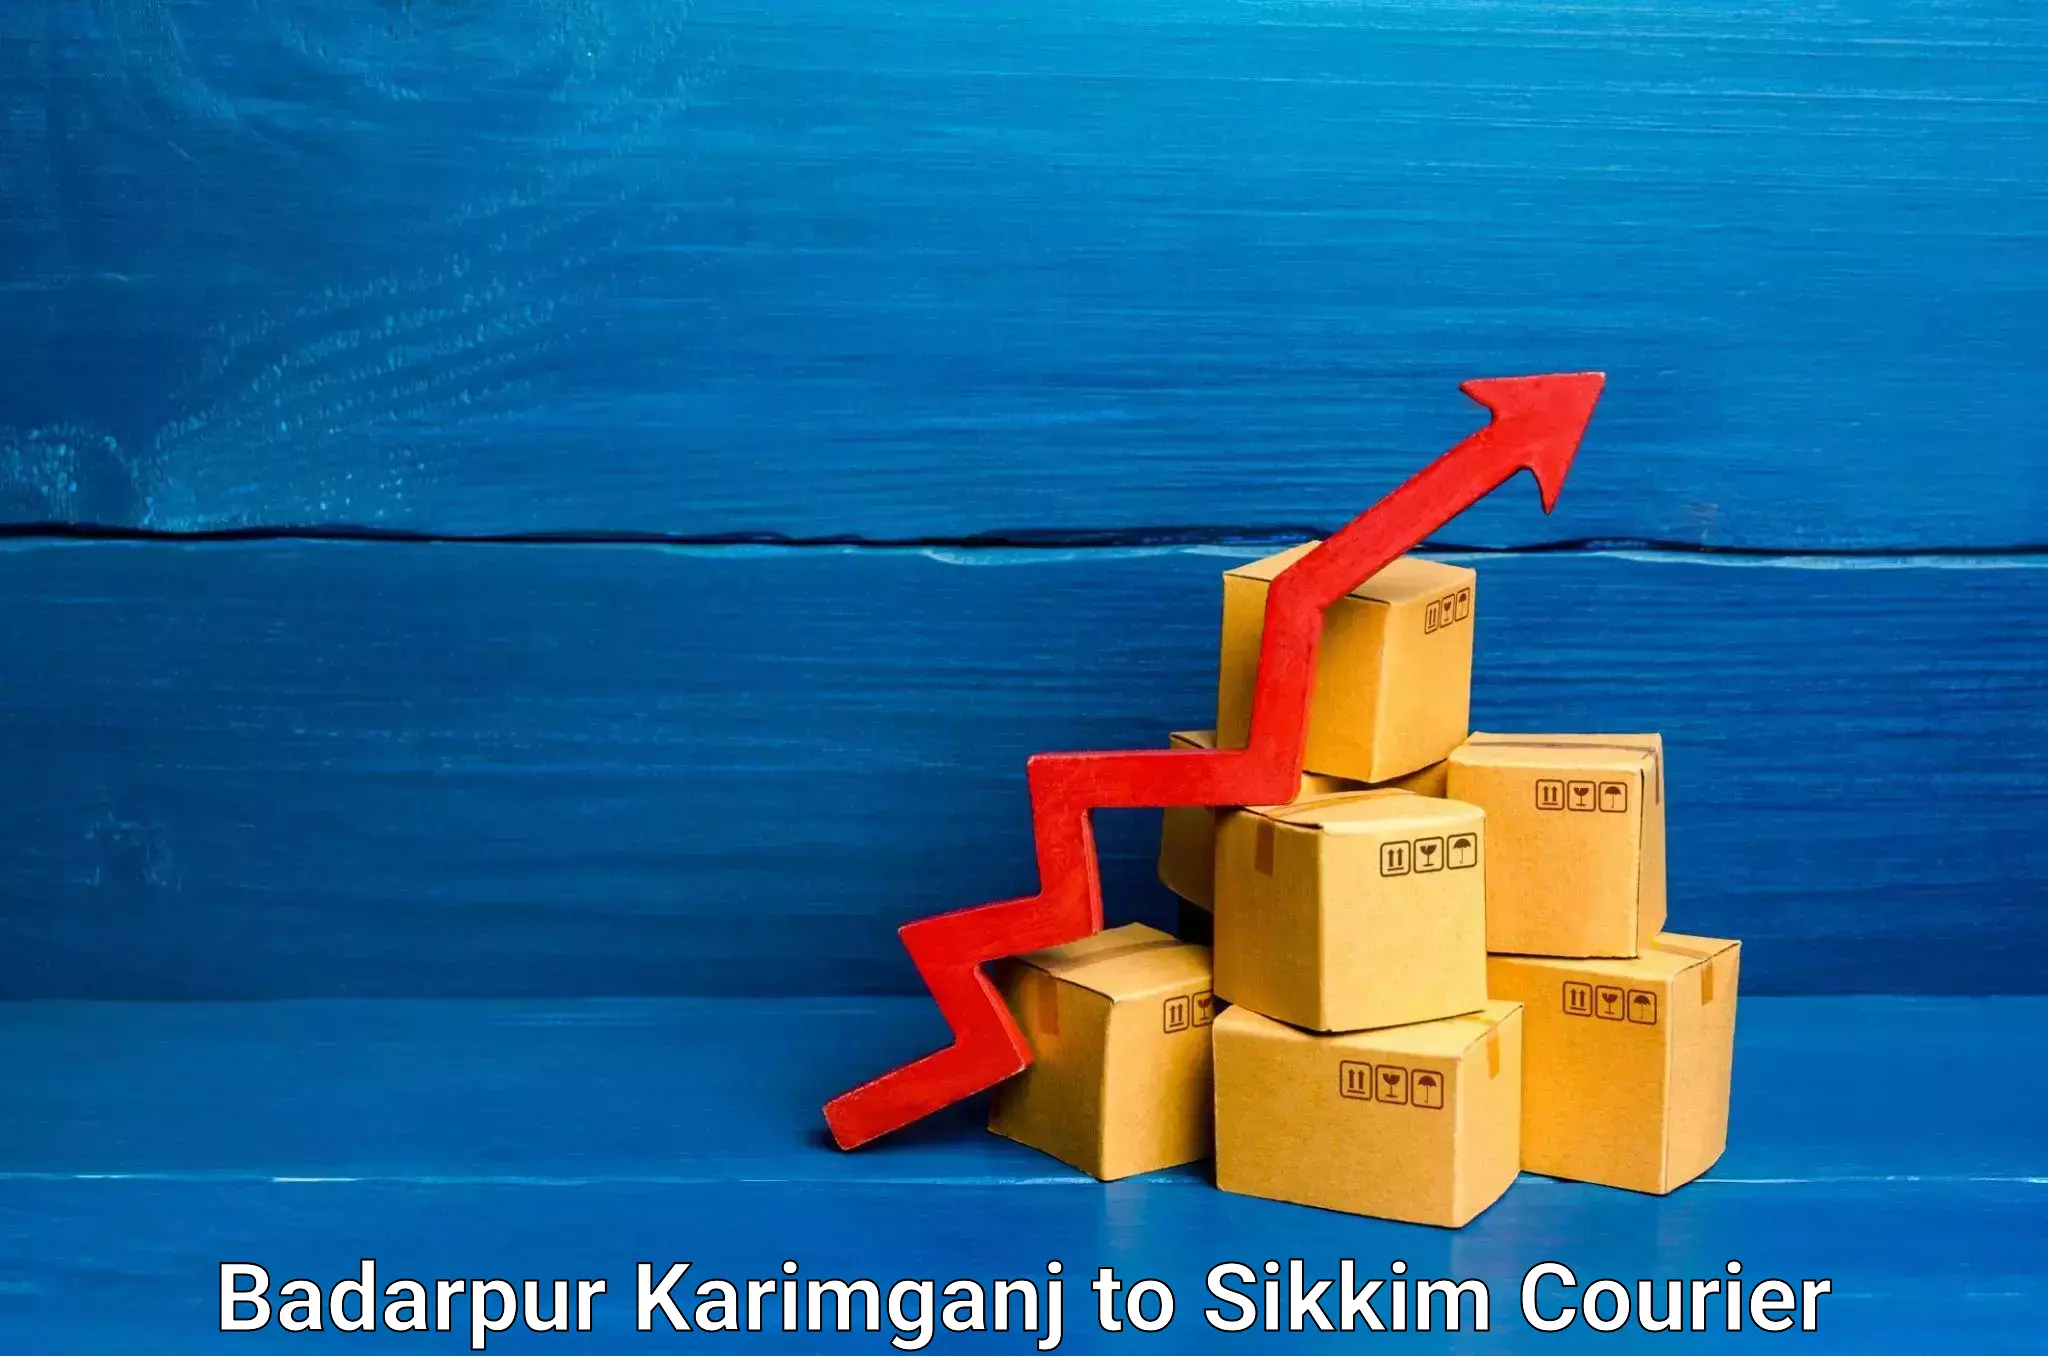 Courier service innovation Badarpur Karimganj to Mangan